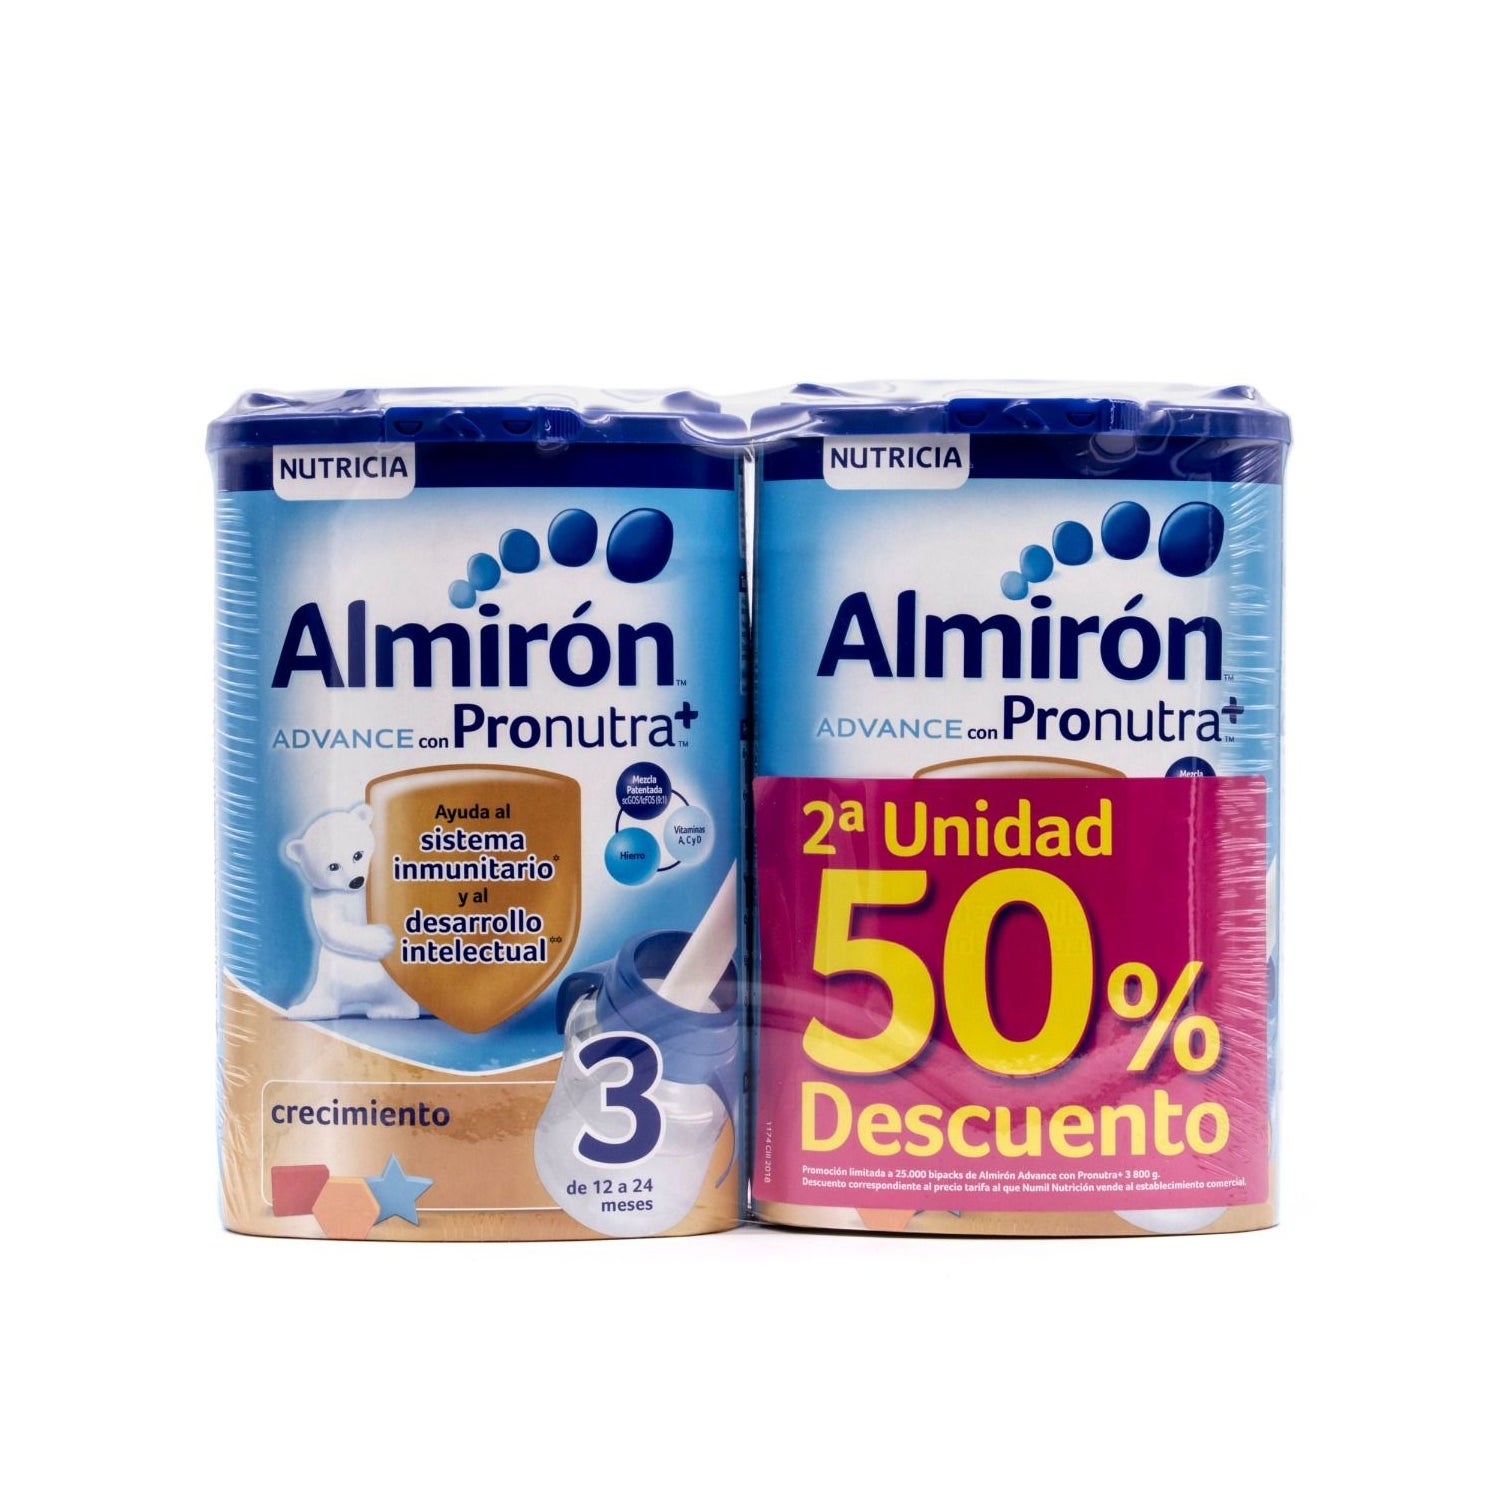 Almirón Advance Pronutra 3 2x800g